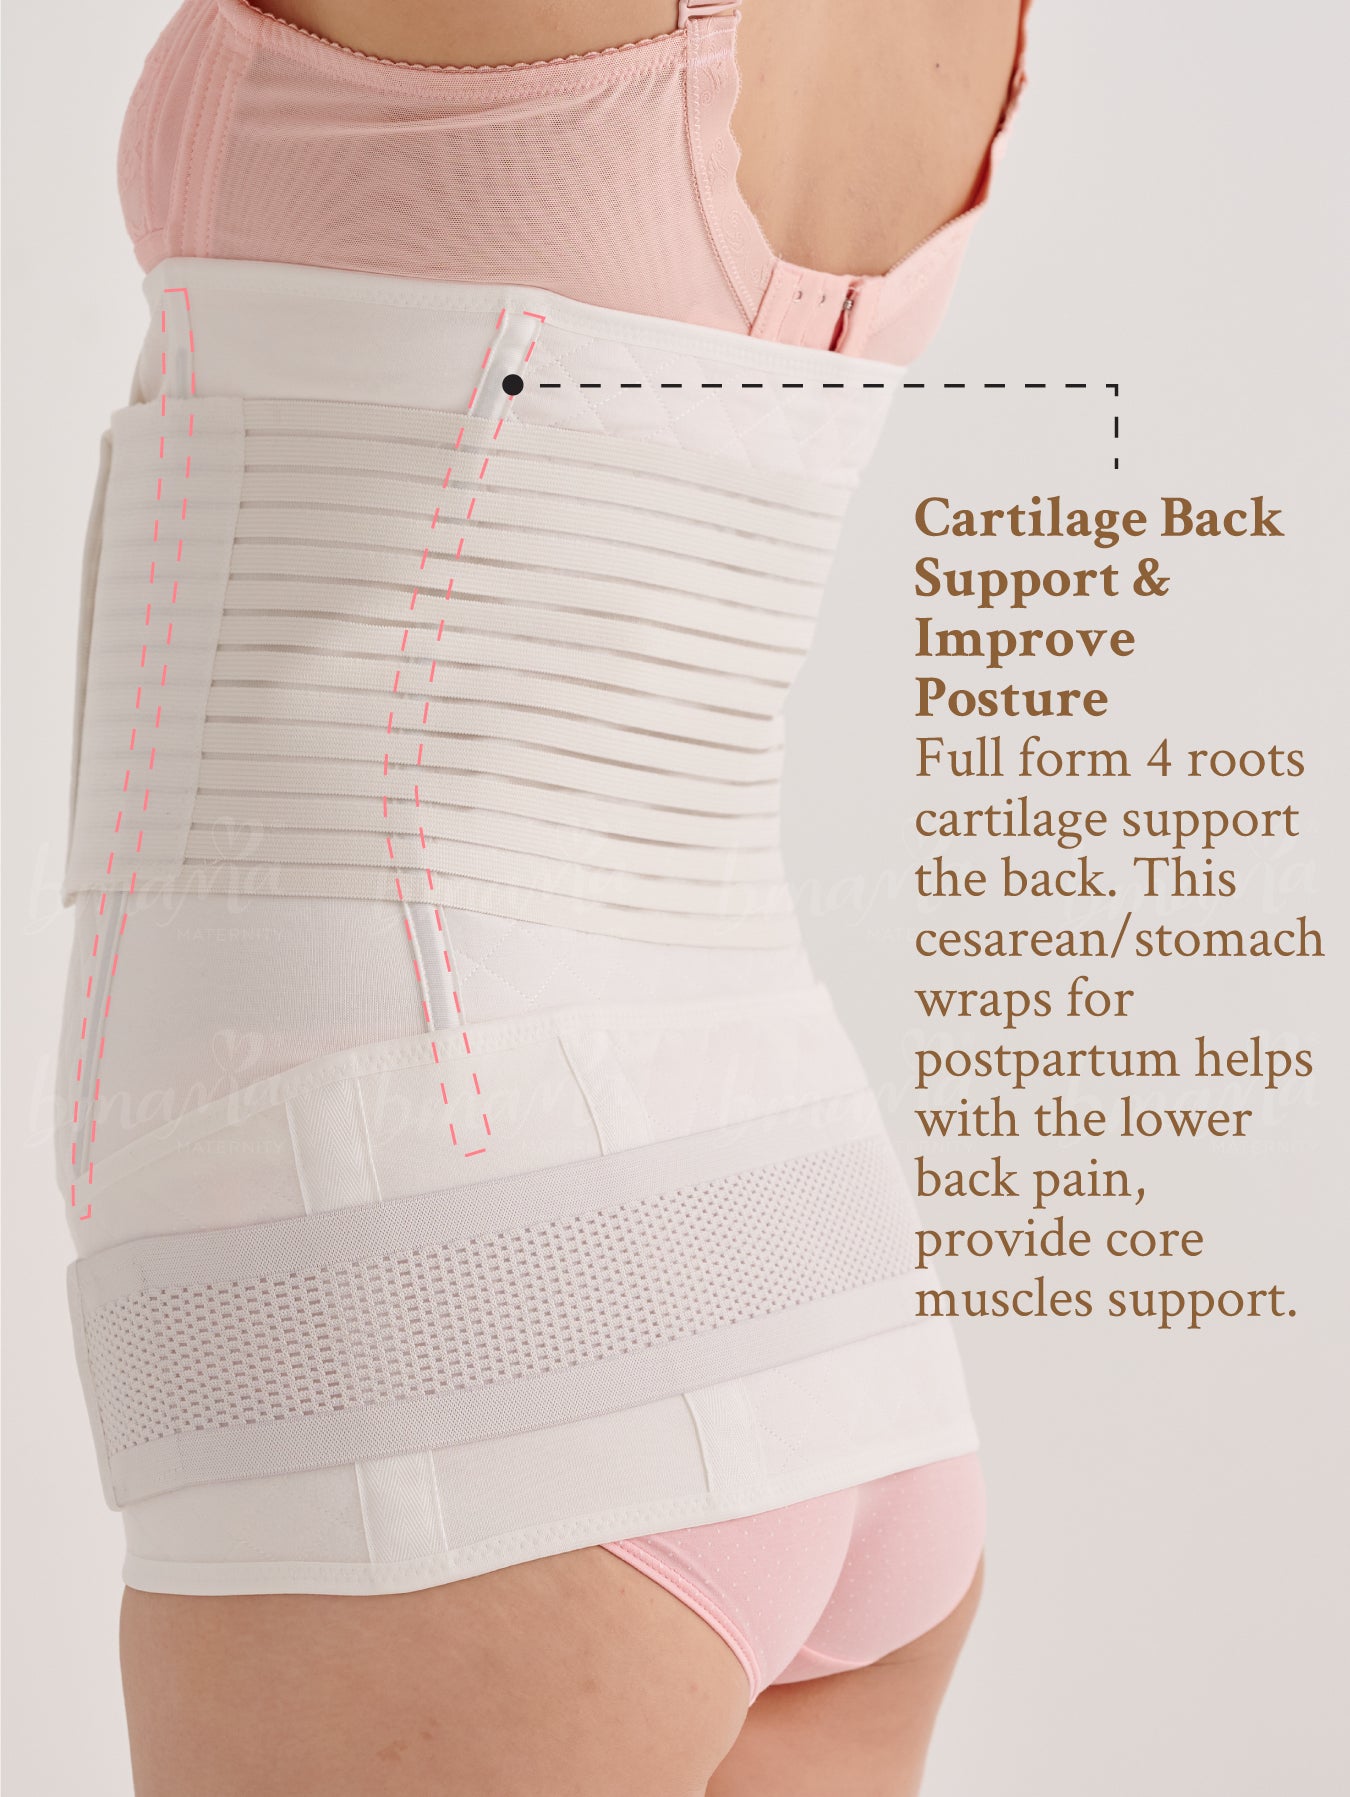 Cotton belly binder for comfort